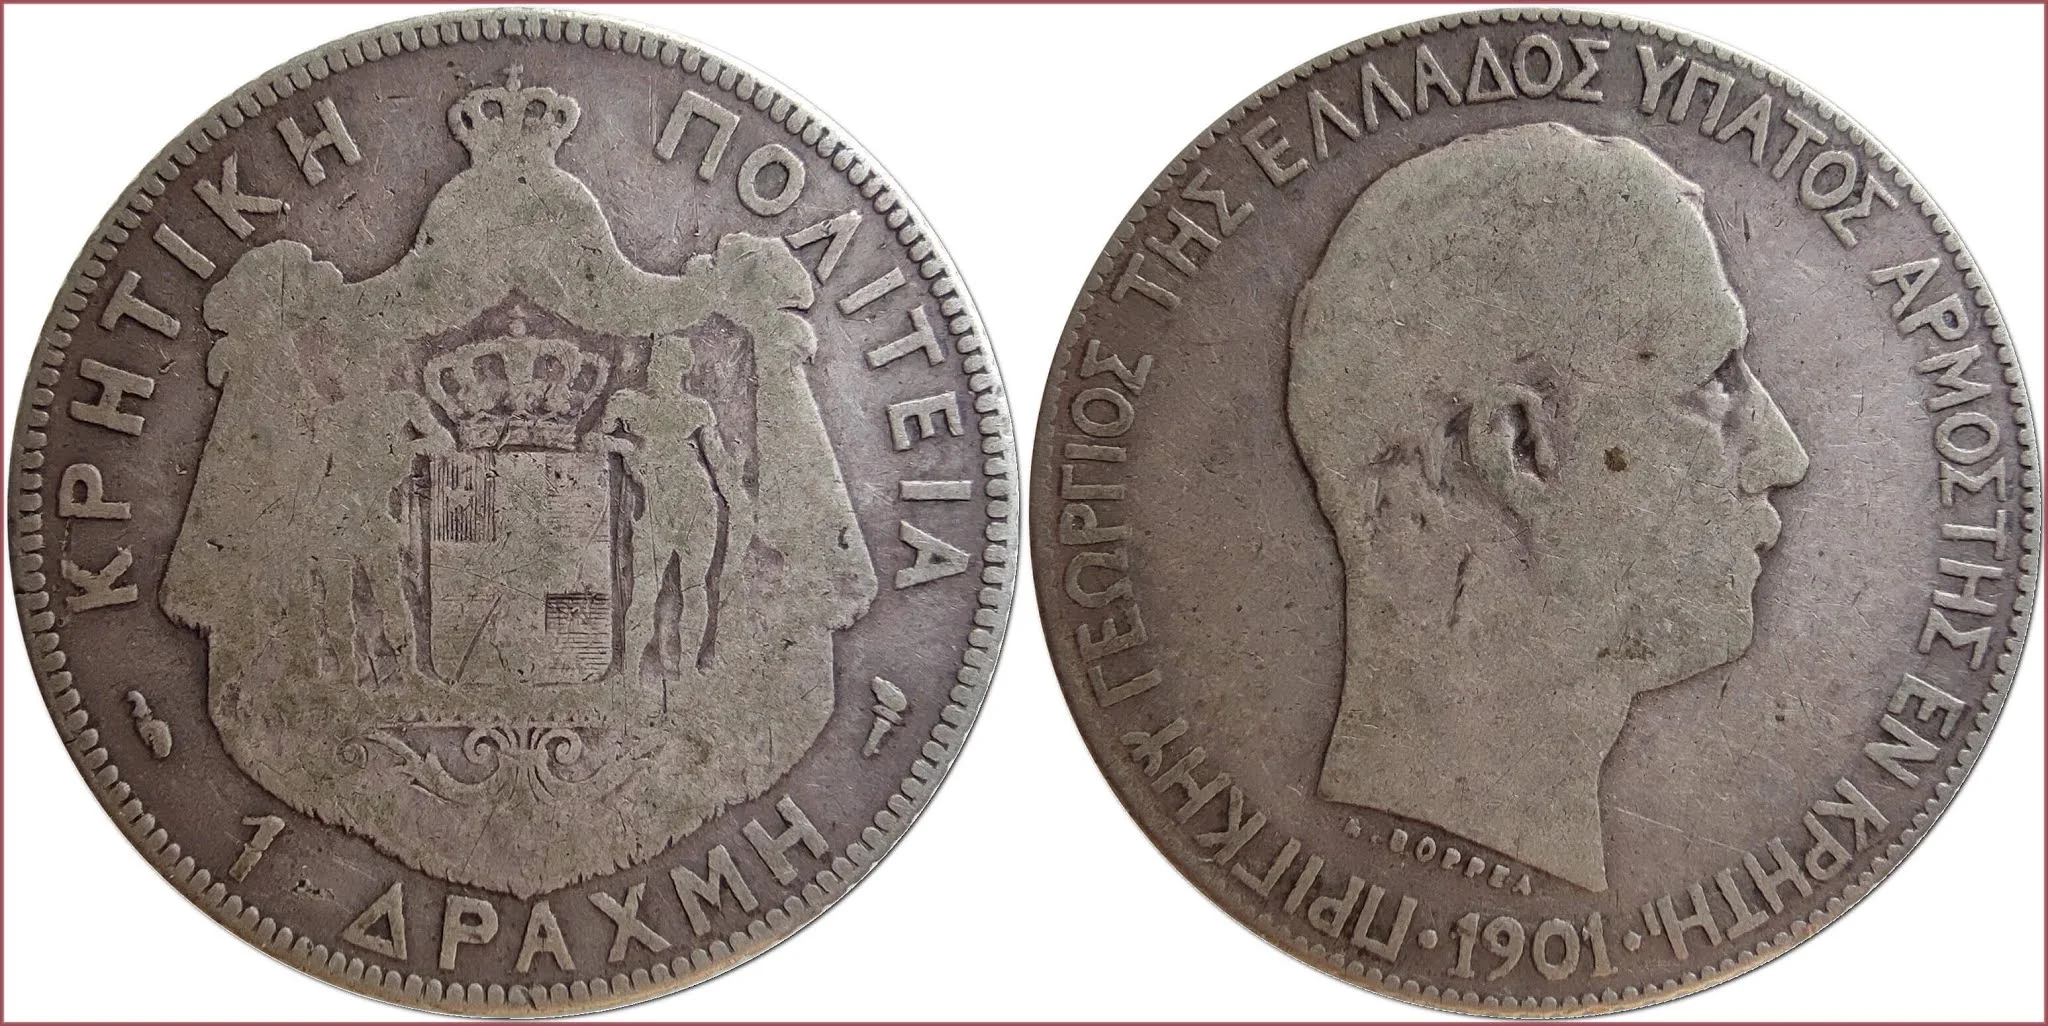 1 drachma (δραχμή), 1901: Cretan State